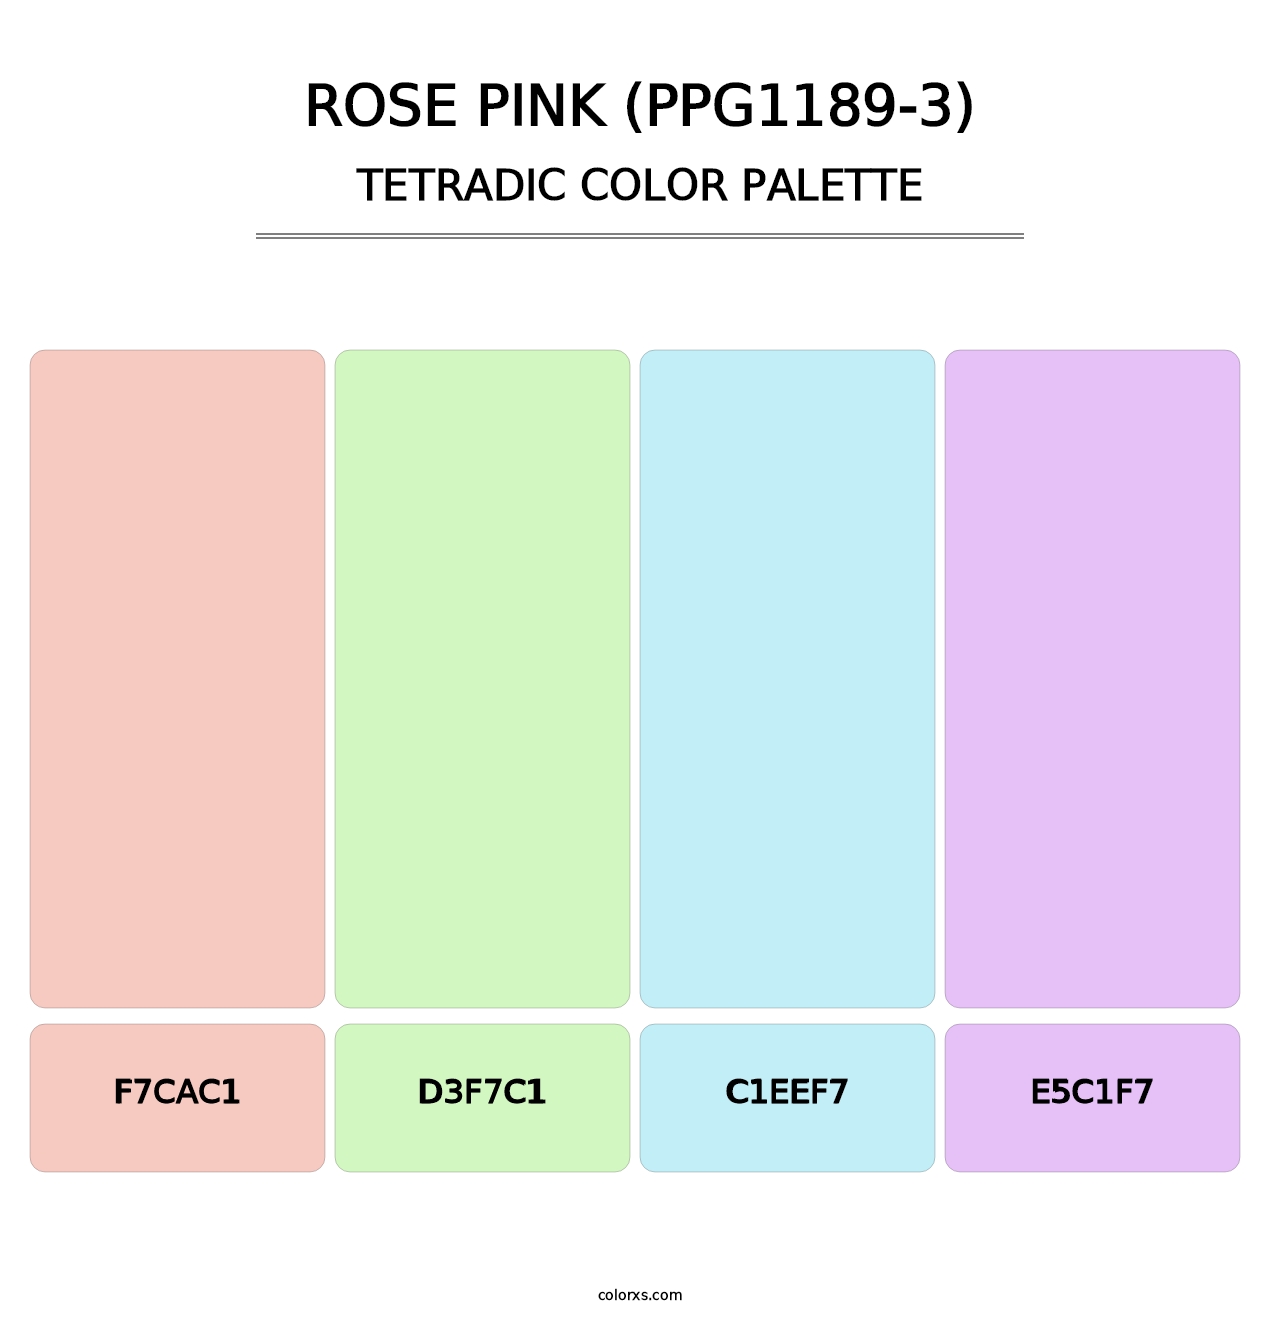 Rose Pink (PPG1189-3) - Tetradic Color Palette